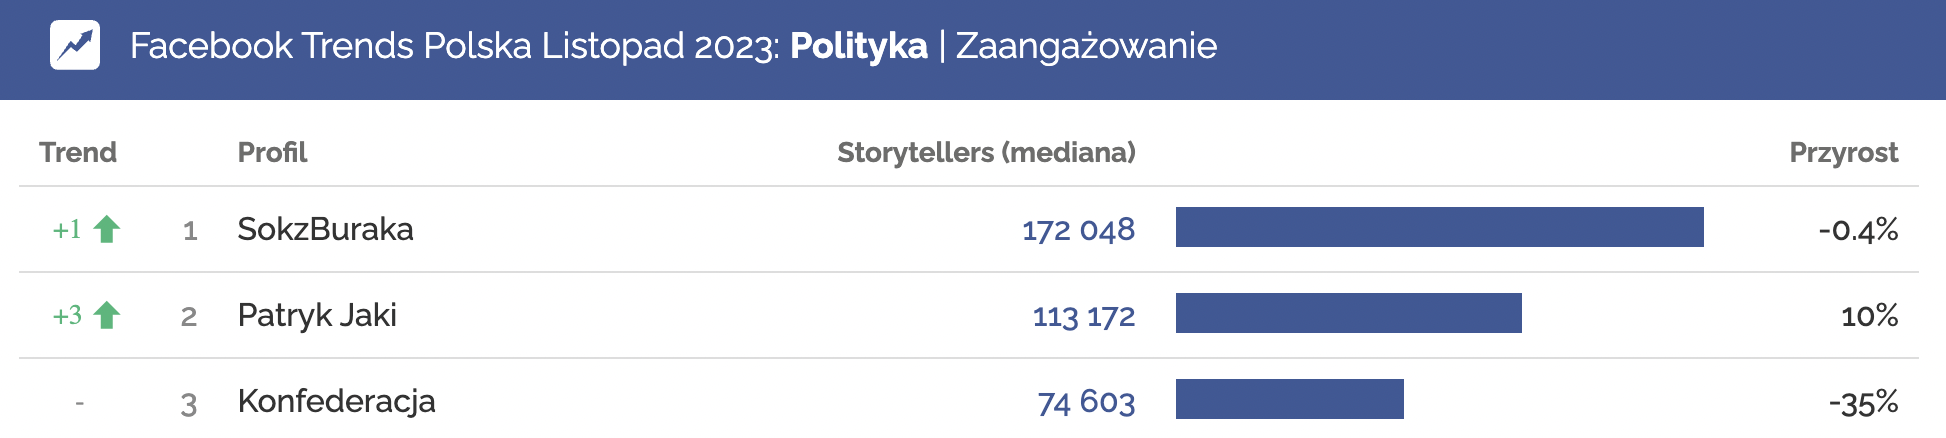 profile polityka top zaangażowanie facebook listopad 2023